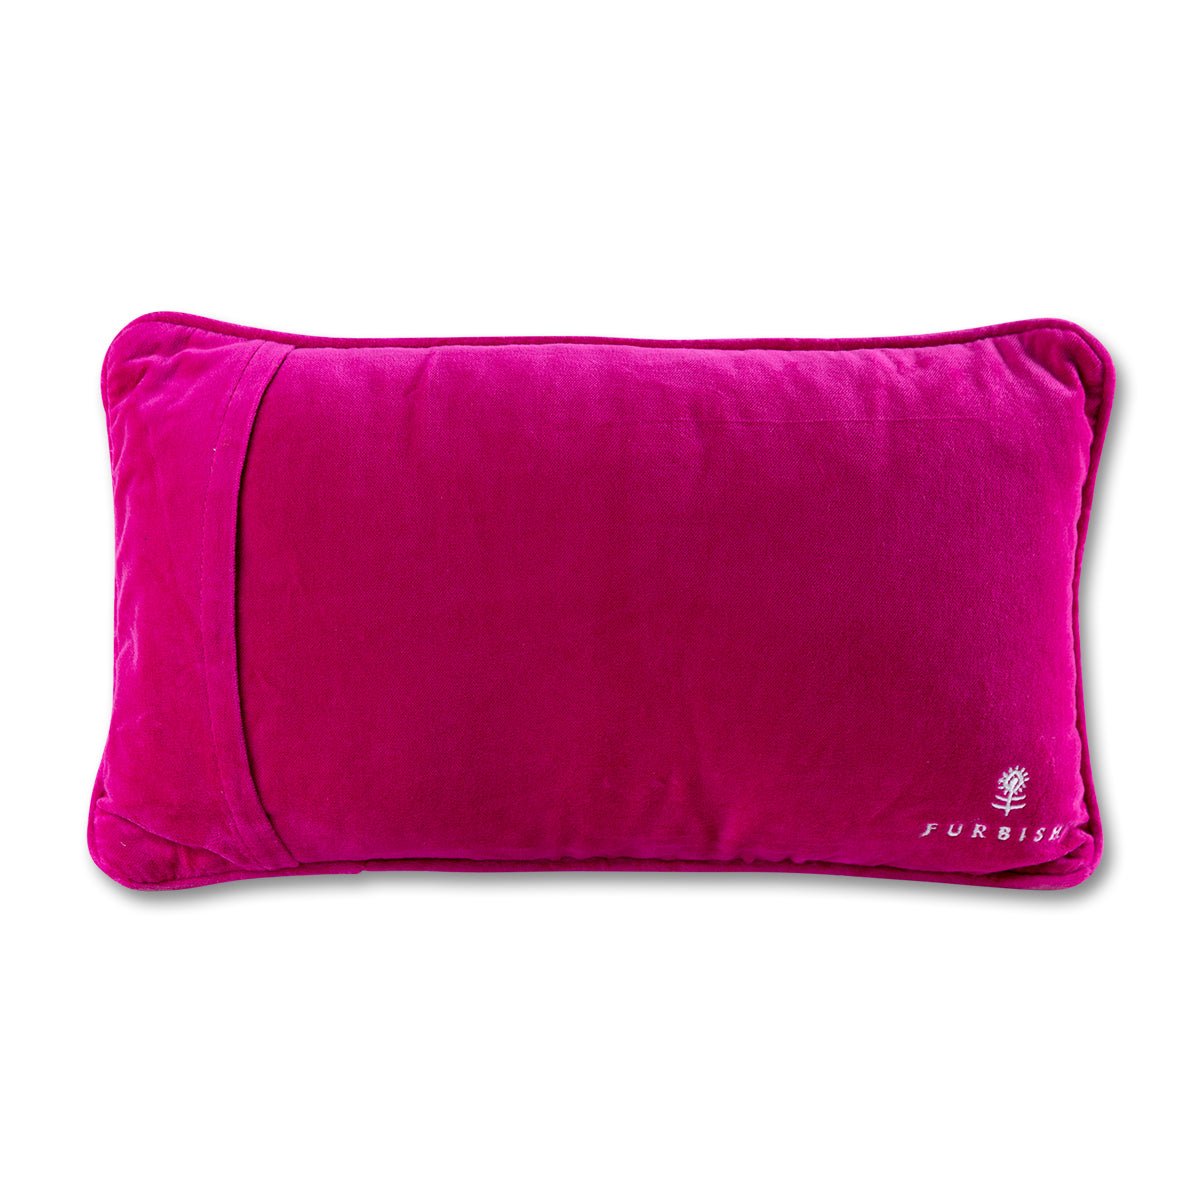 Come Sit By Me Needlepoint Pillow - Throw Pillows - Furbish Studio - The Grove